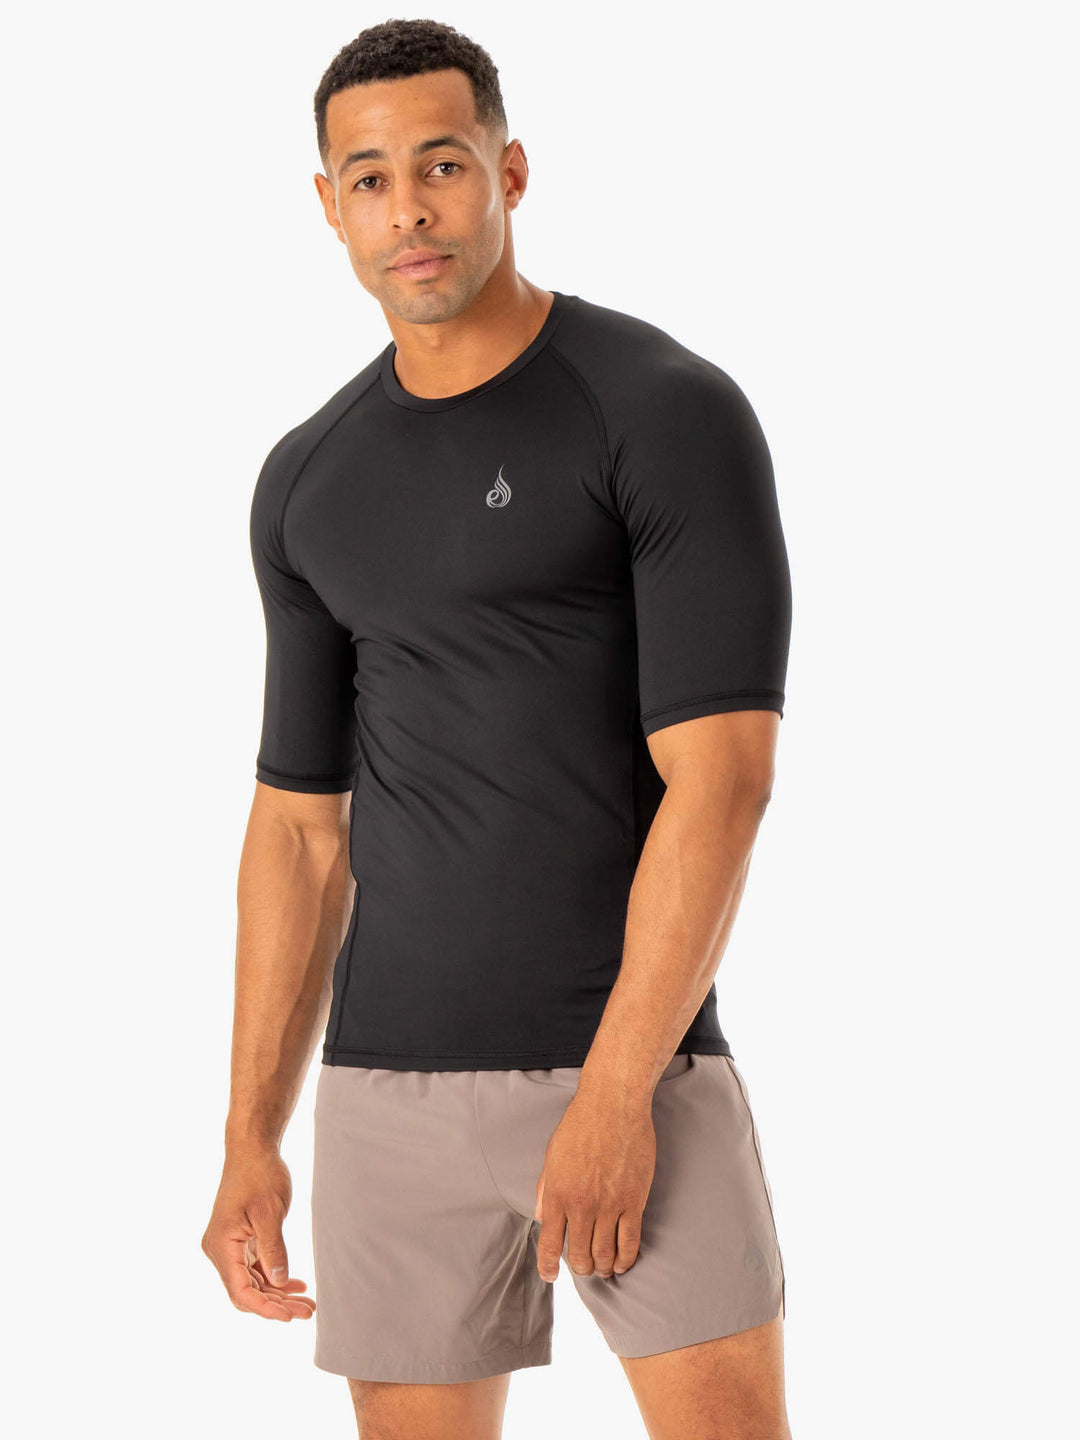 Division Base Layer T-Shirt - Black Clothing Ryderwear 